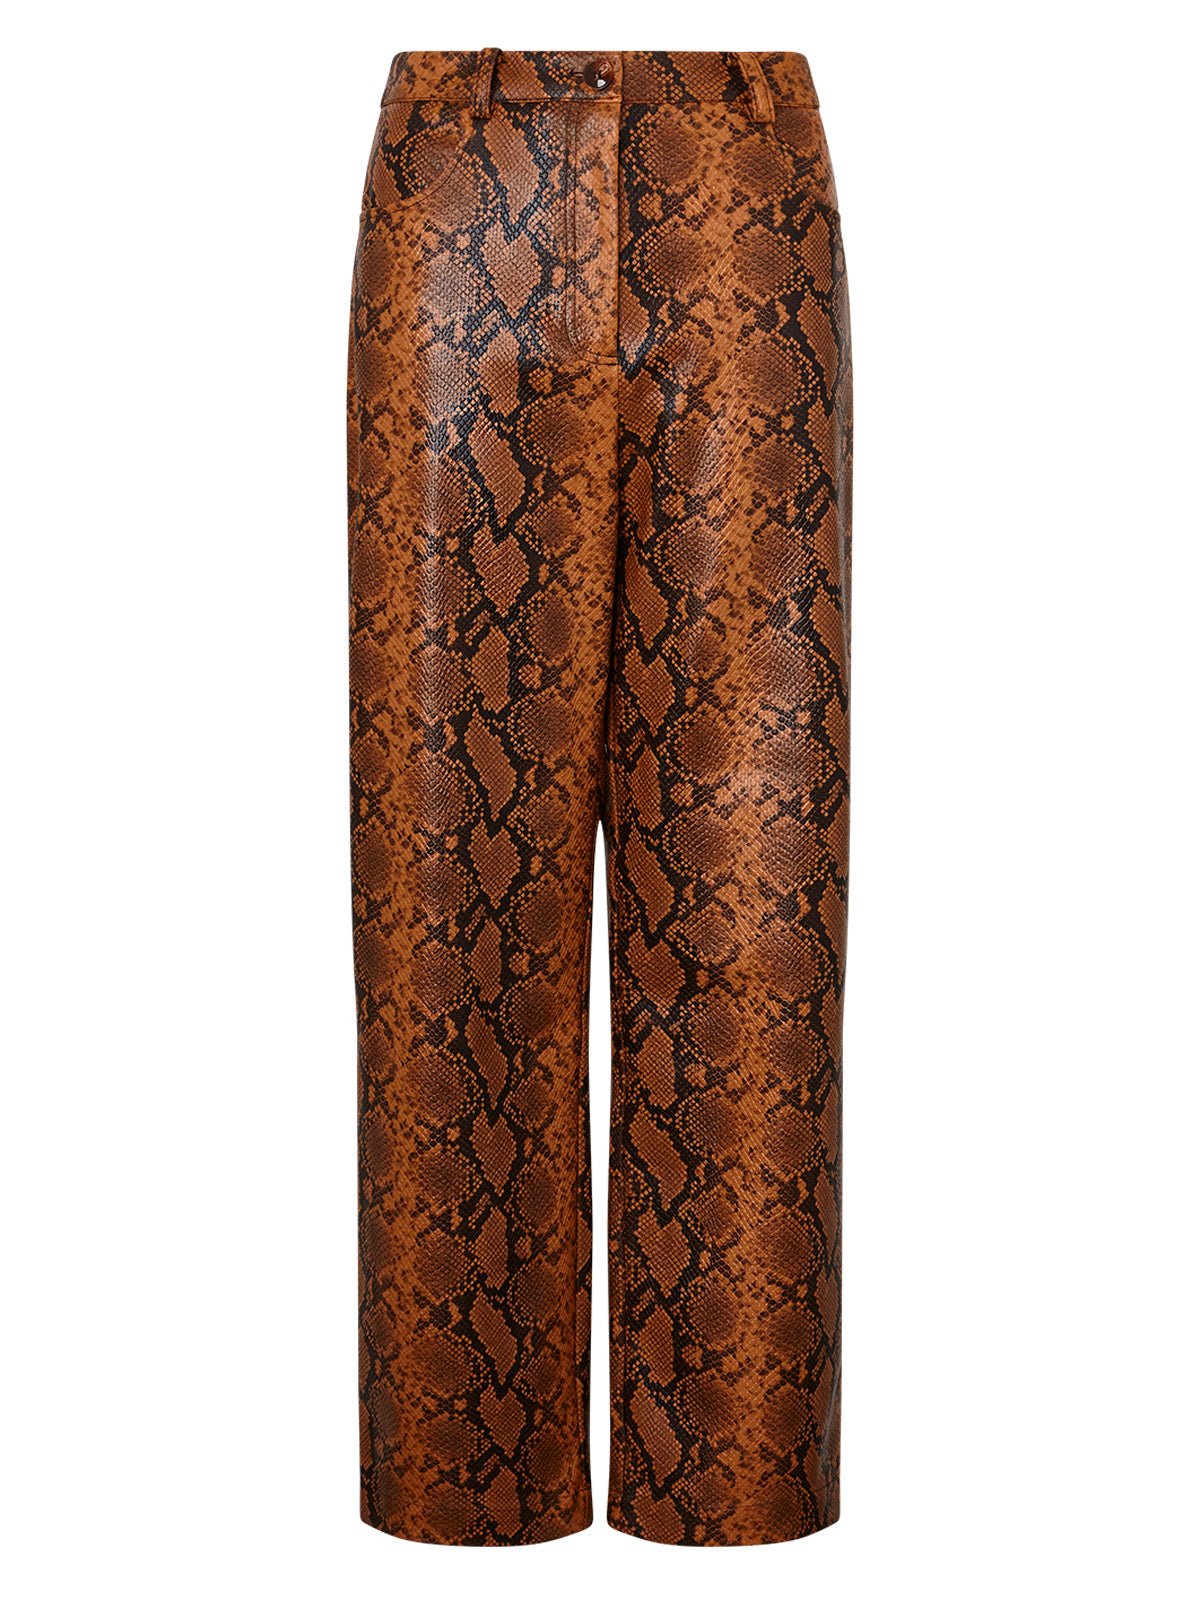 Buy Men's Snakeskin Pants Stylish Casual PU Snake Print Nightclub Disco  Vintage Trousers Gray at Amazon.in